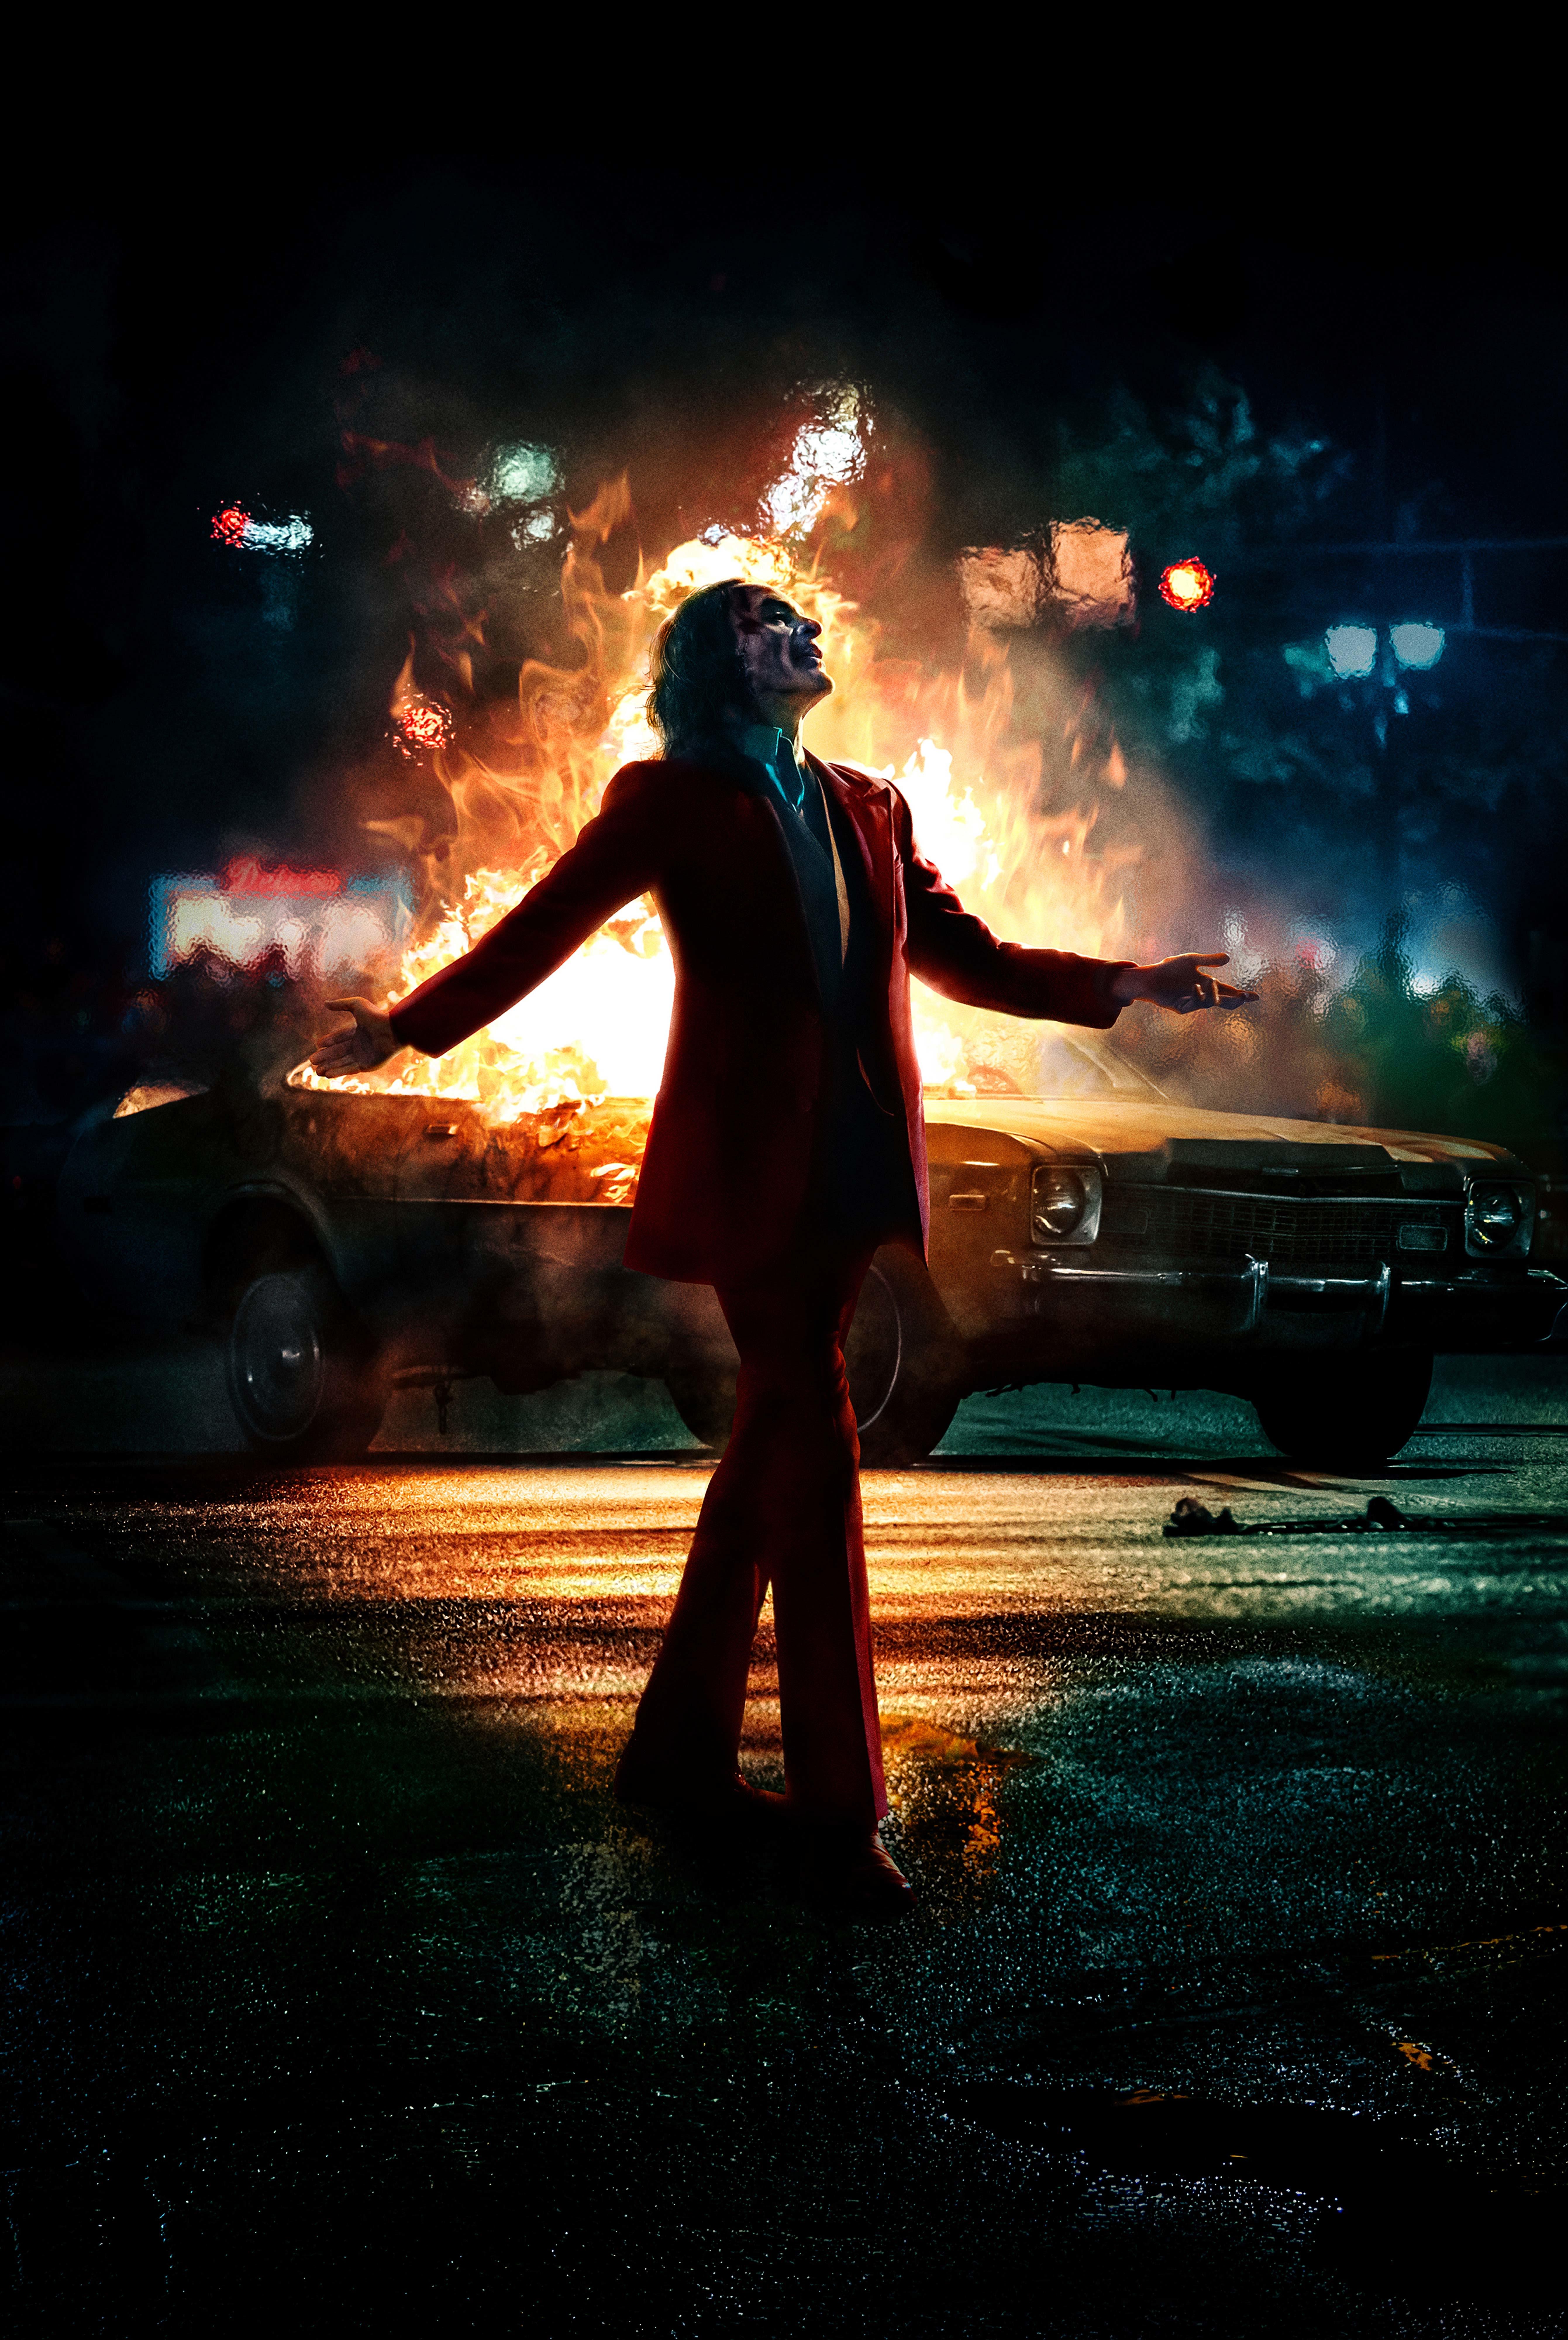 Joker IMAX Poster Wallpaper, HD Movies 4K Wallpaper, Image